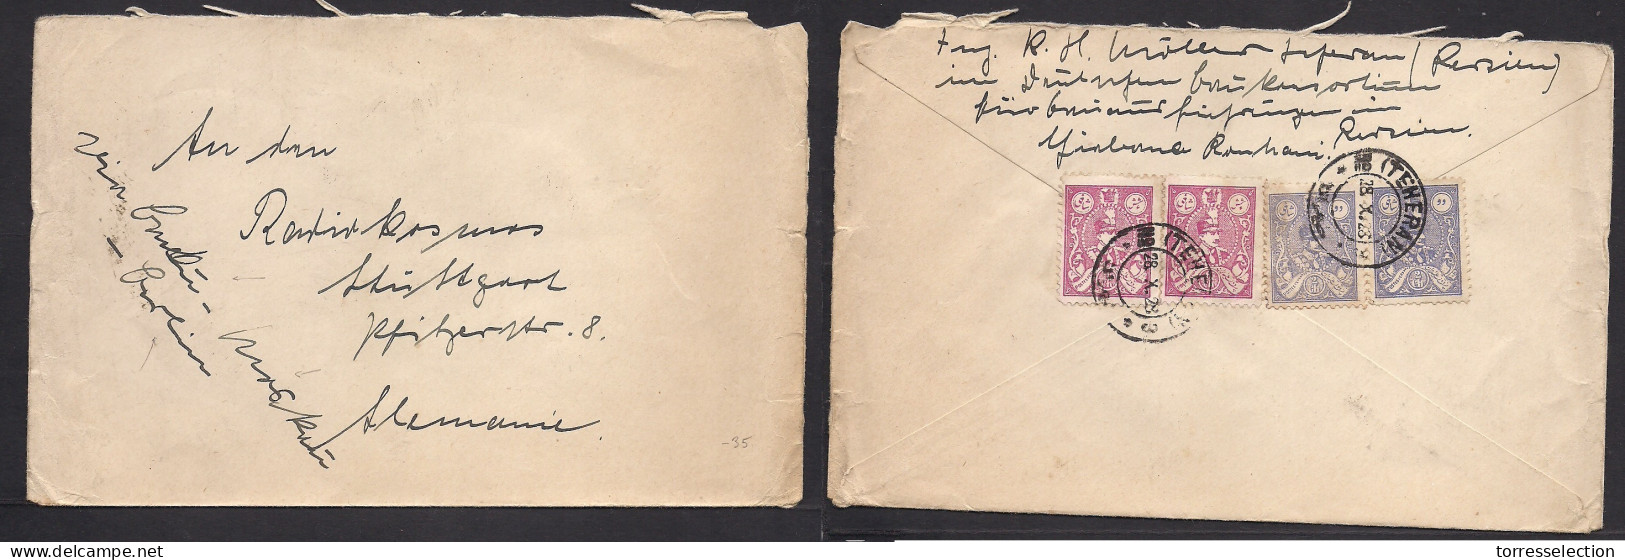 PERSIA. 1928 (28 Oct) Teheran - Germany, Stuttgart. Reverse Multifkd Env. Airmail Transited Endorsement On Front. XSALE. - Iran